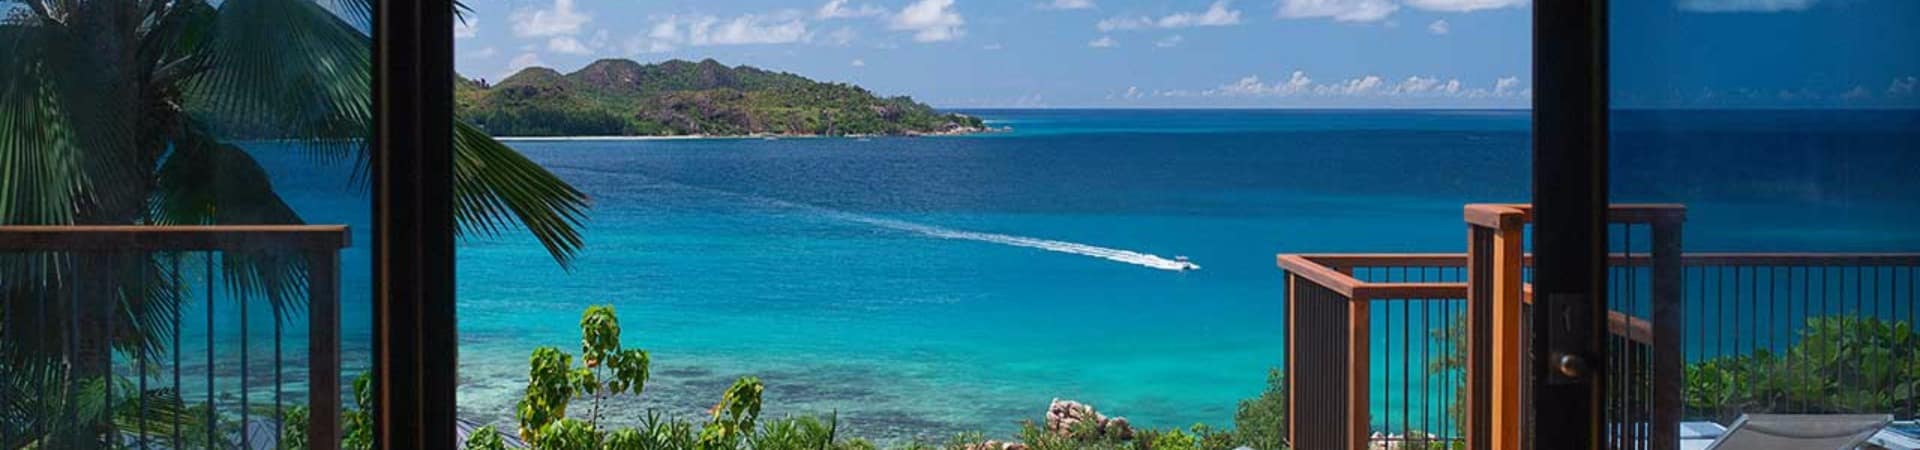 Raffles seychelles ocean view villa piscina